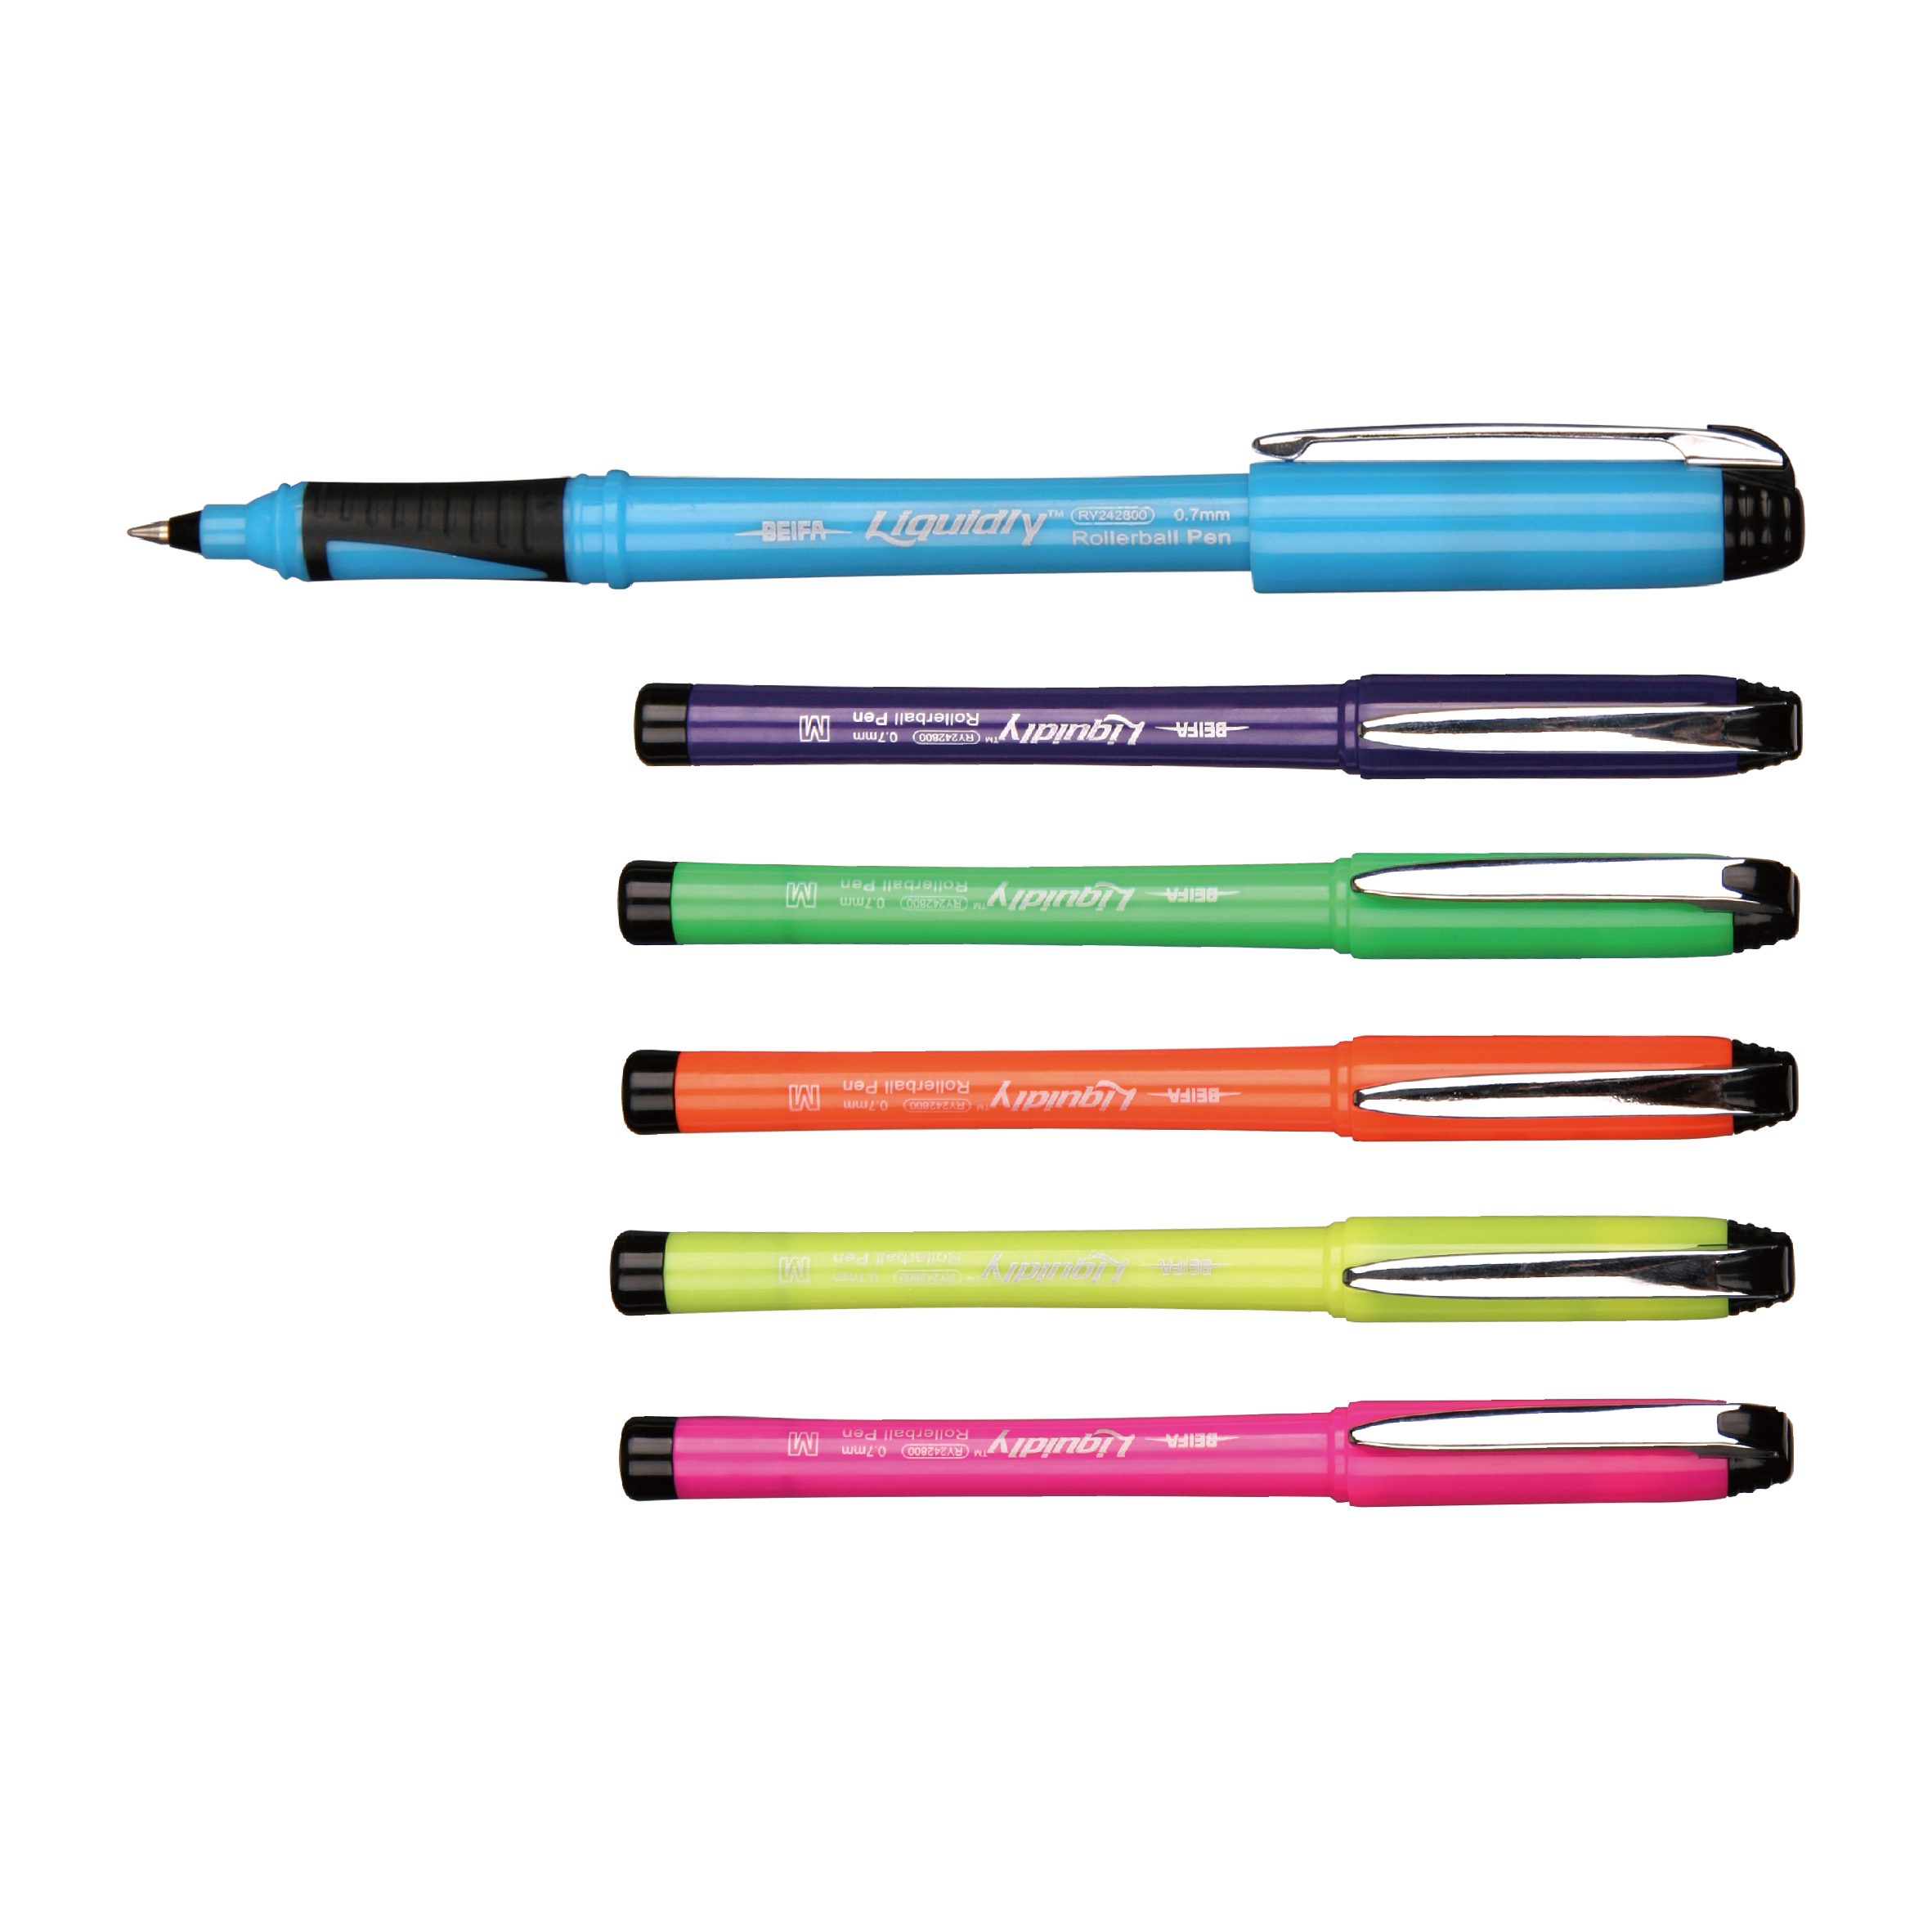 0.7mm/0.5mm Soft Grip Free Ink Pen Blue Ink for School Office